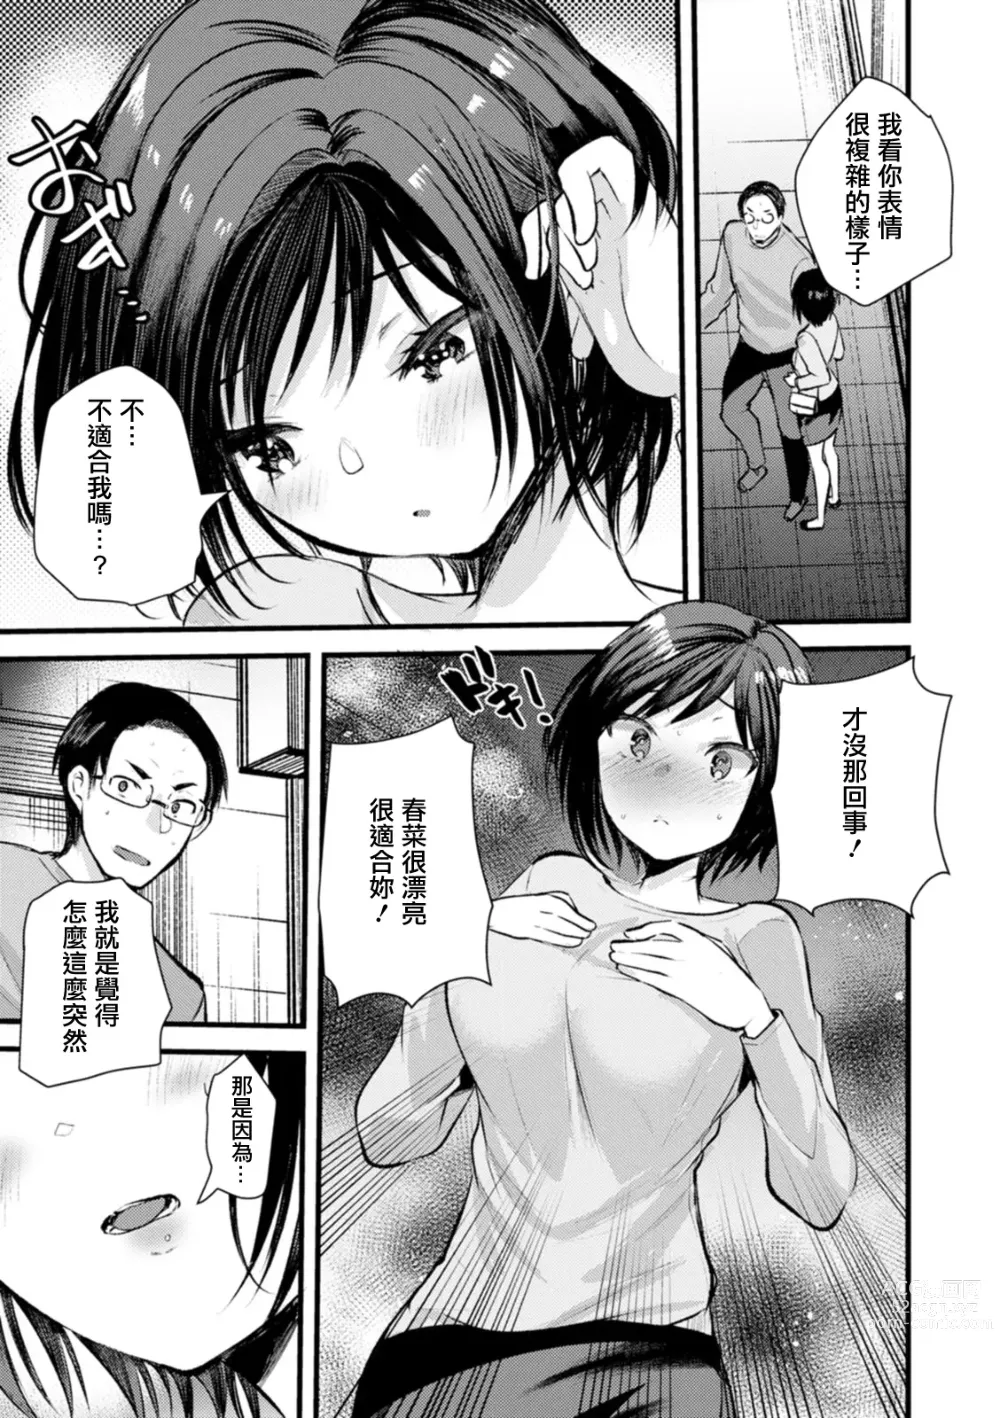 Page 3 of manga Kojirase Ero Nikki Vol.10